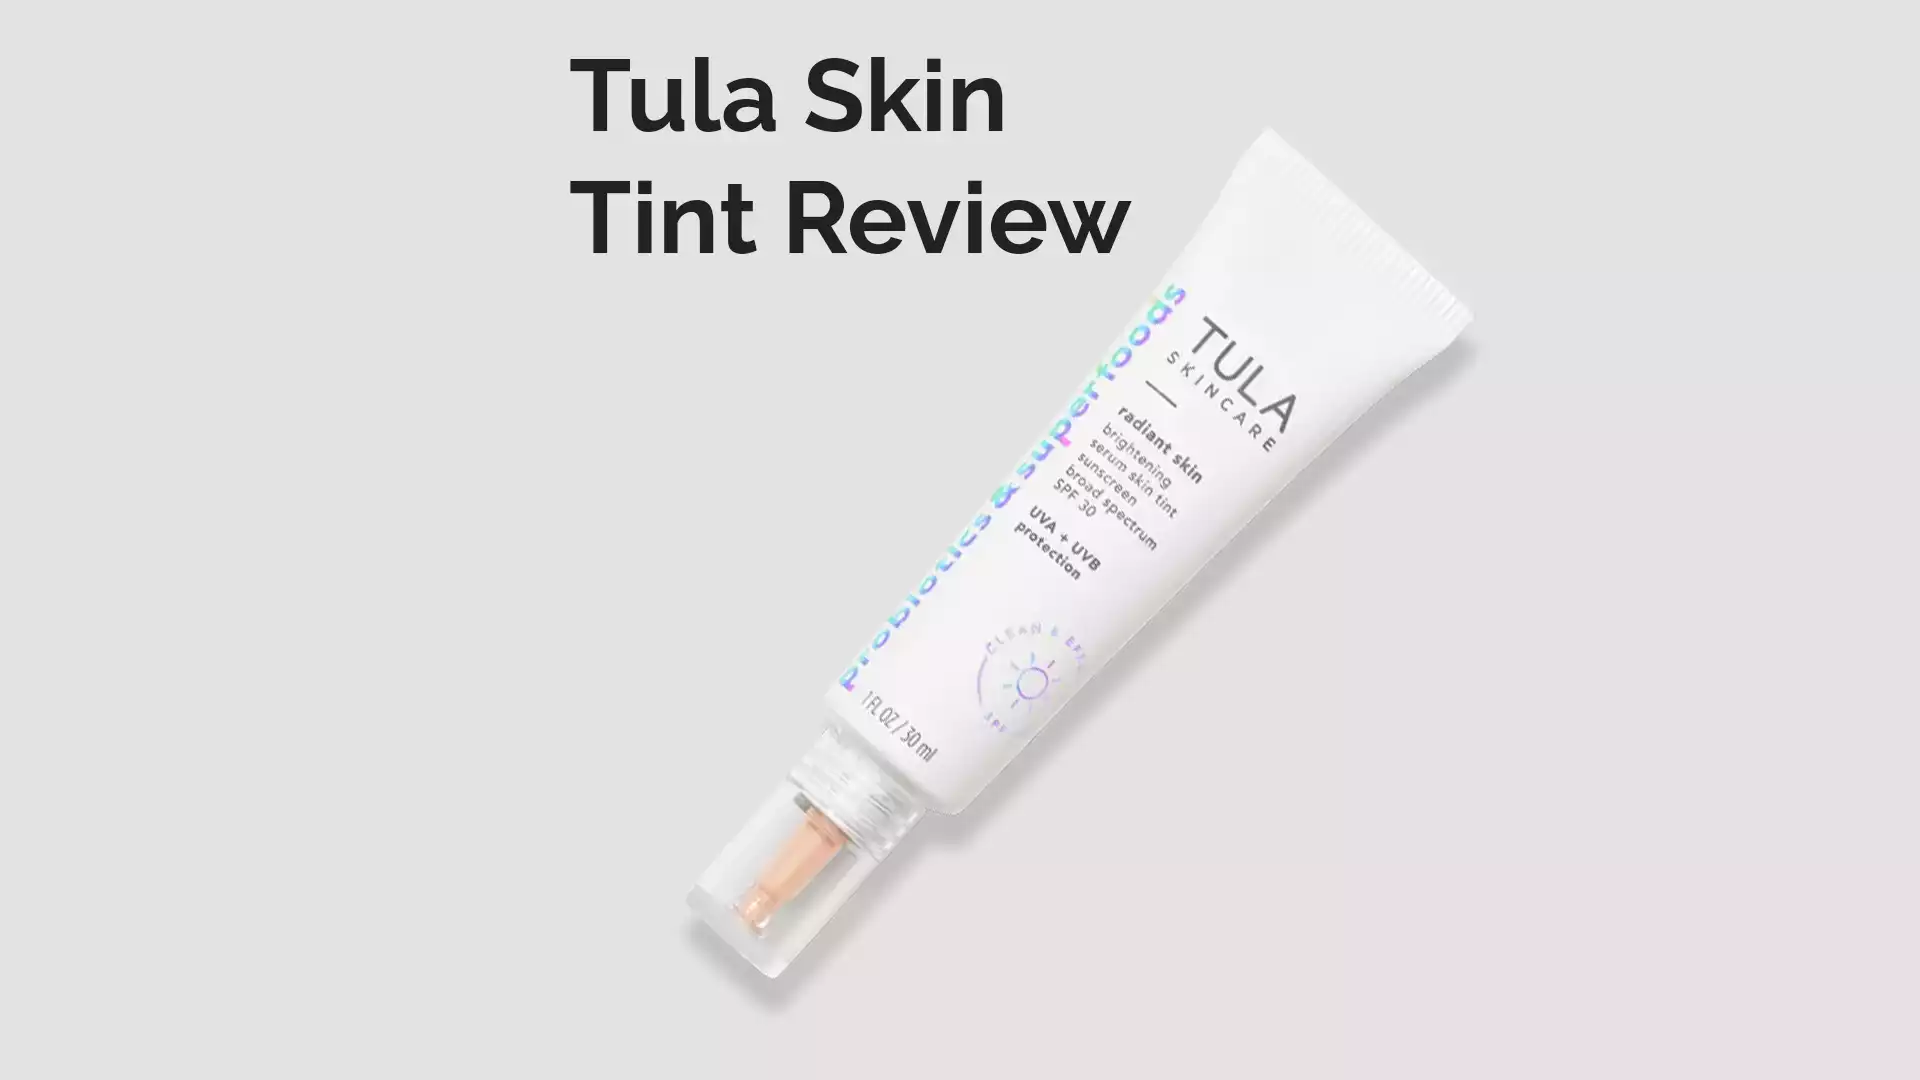 Tula Skin Tint Review